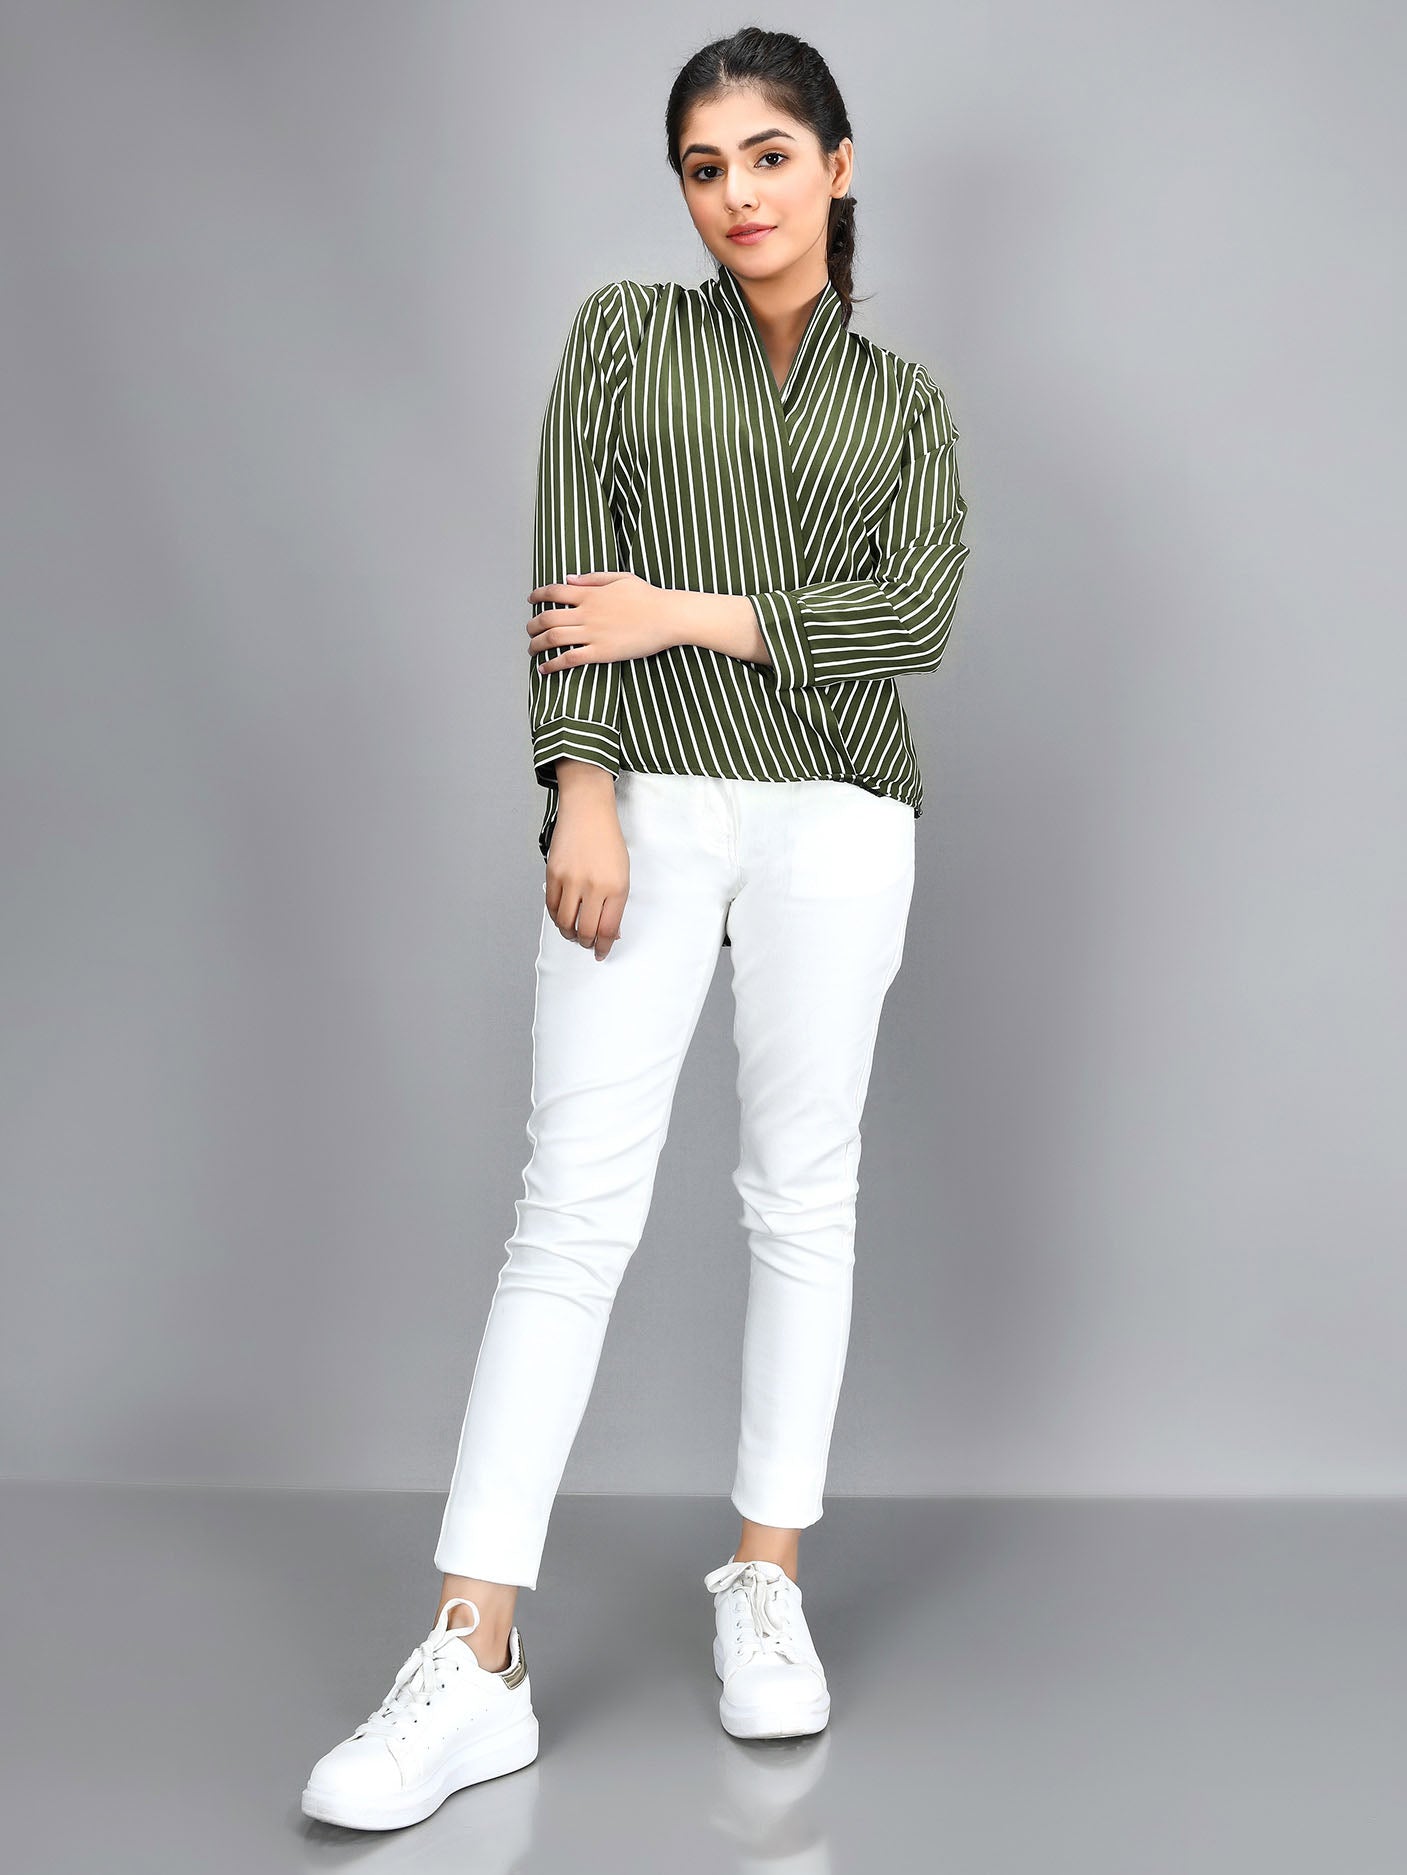 Striped Shirt - Green